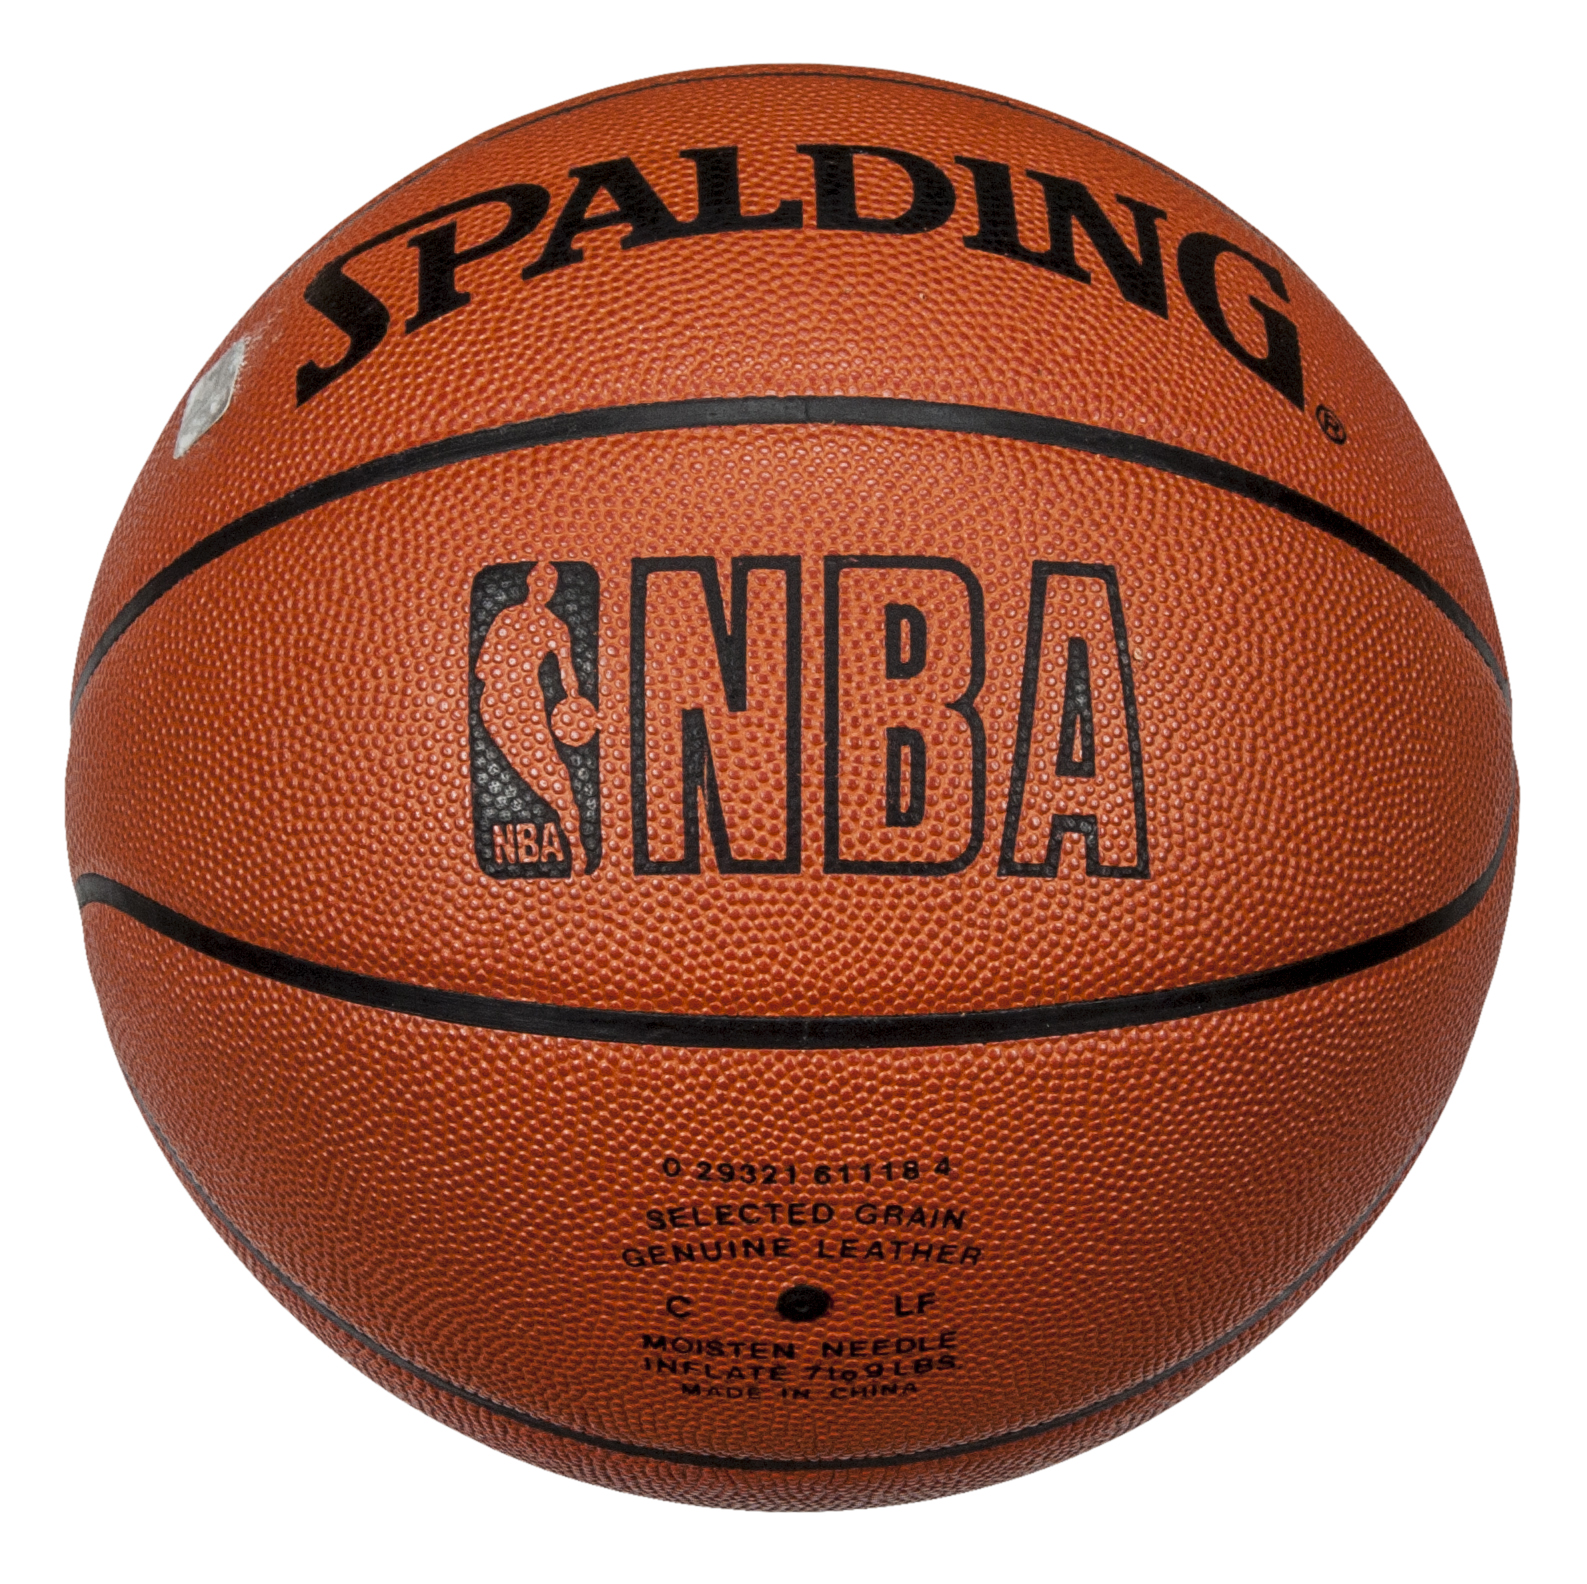 Nba Basket